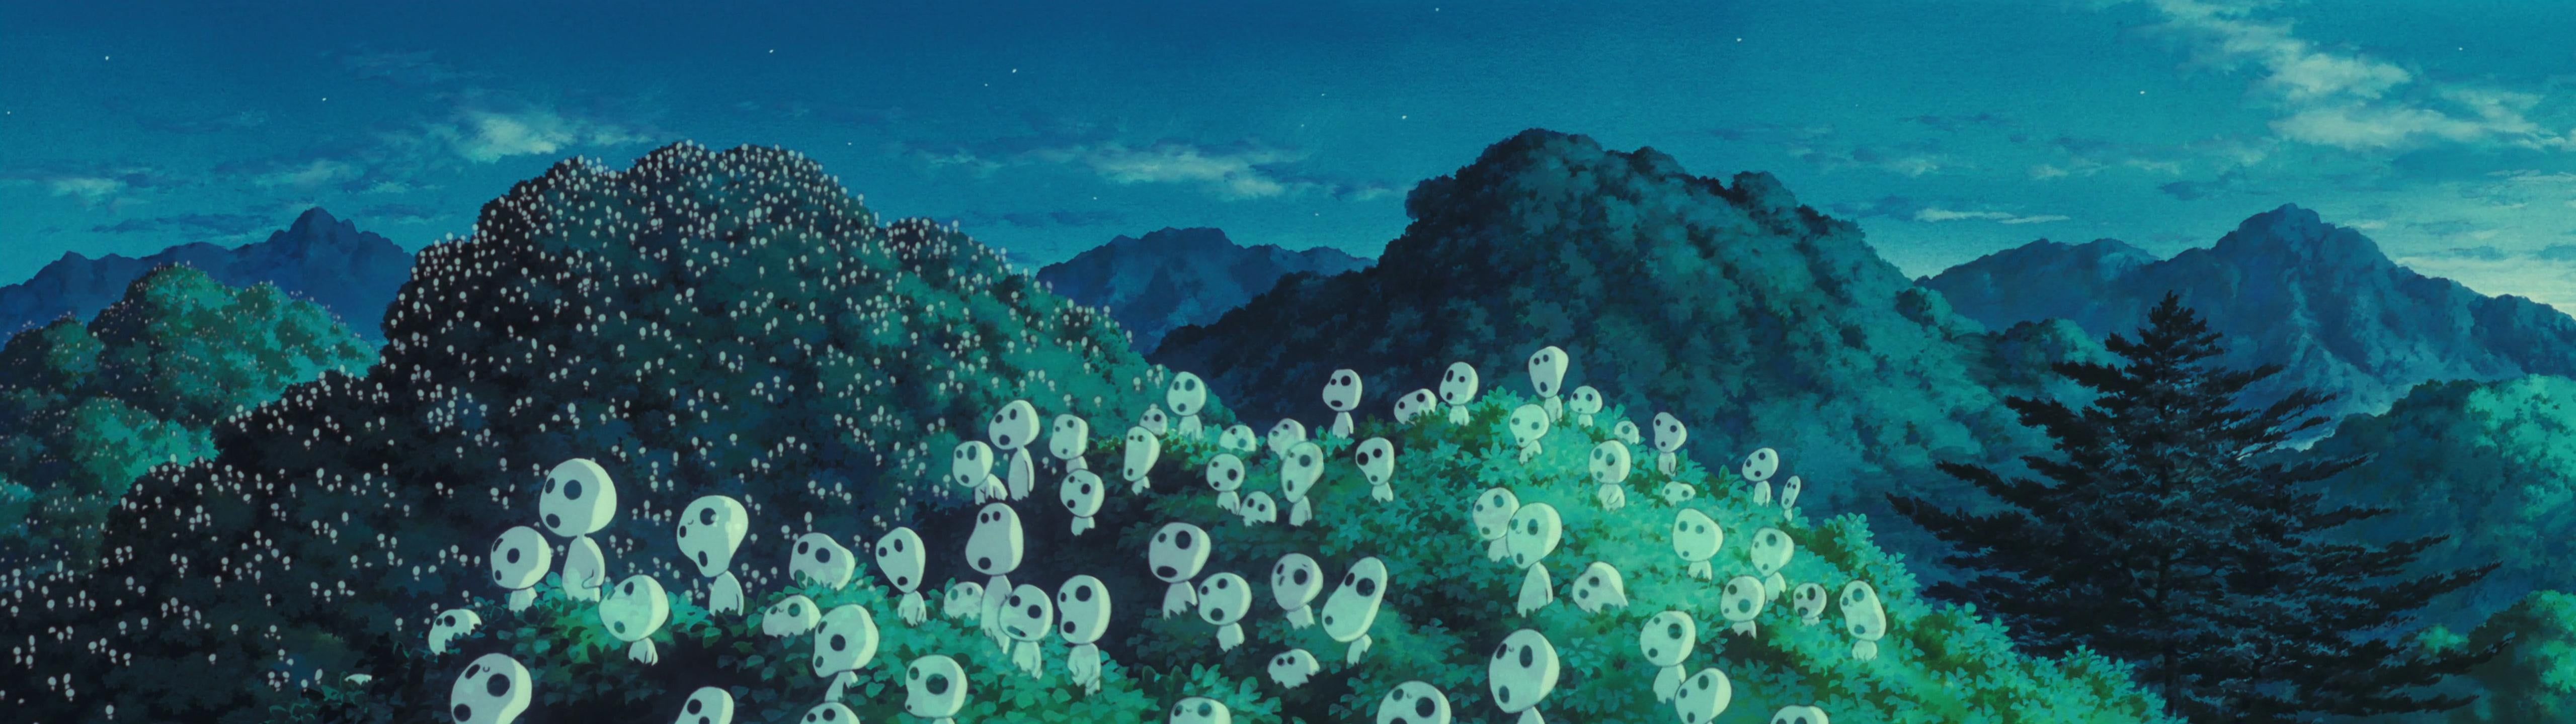 Super Ultra Wide Studio Ghibli wallpaper: ultrawidemasterrace